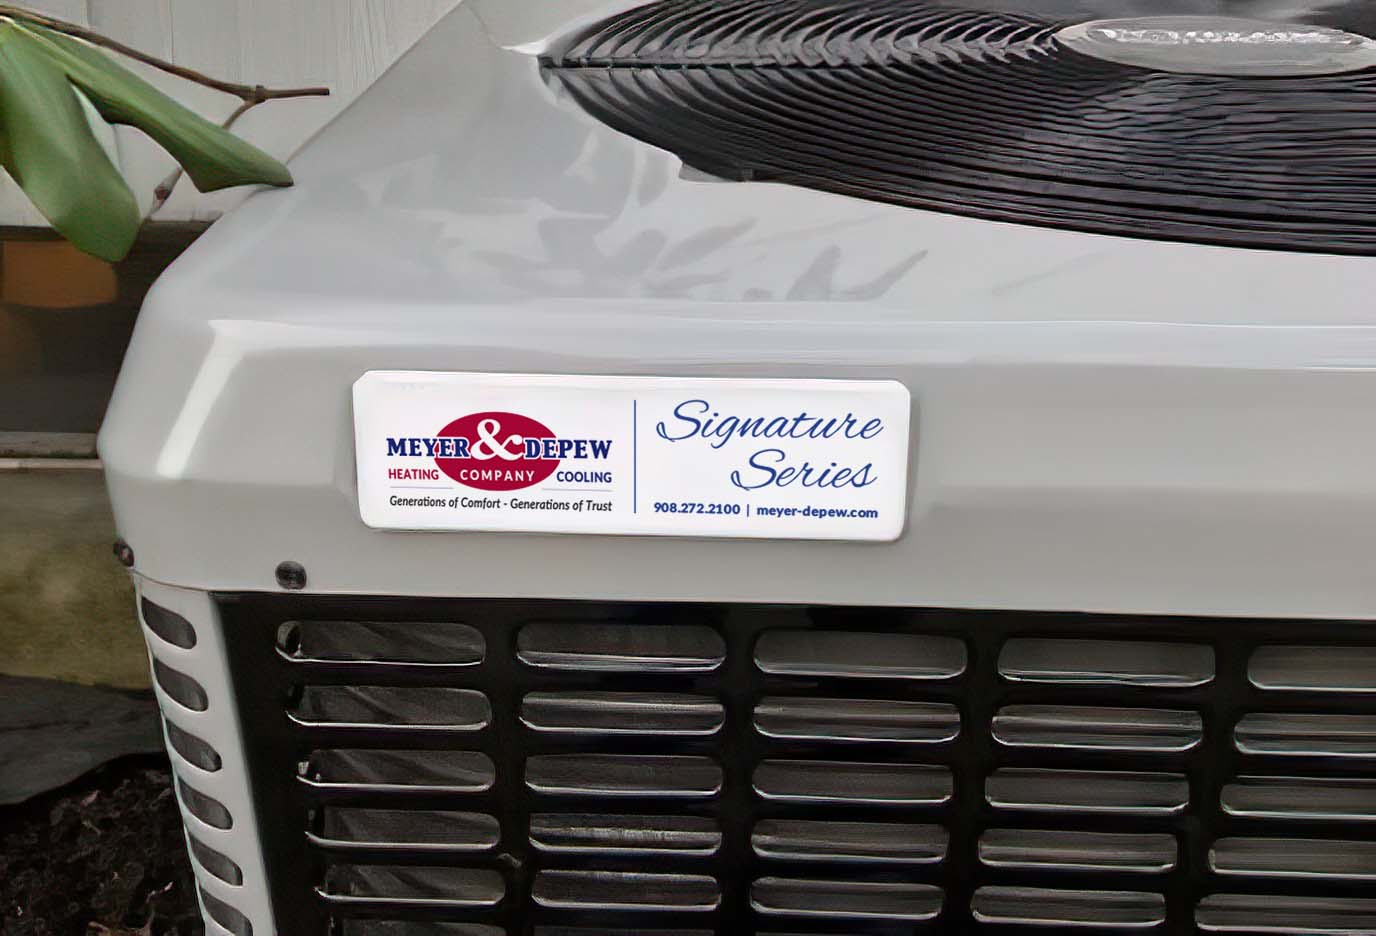 HVAC unit with Meyer & Depew Signature Series logo on it